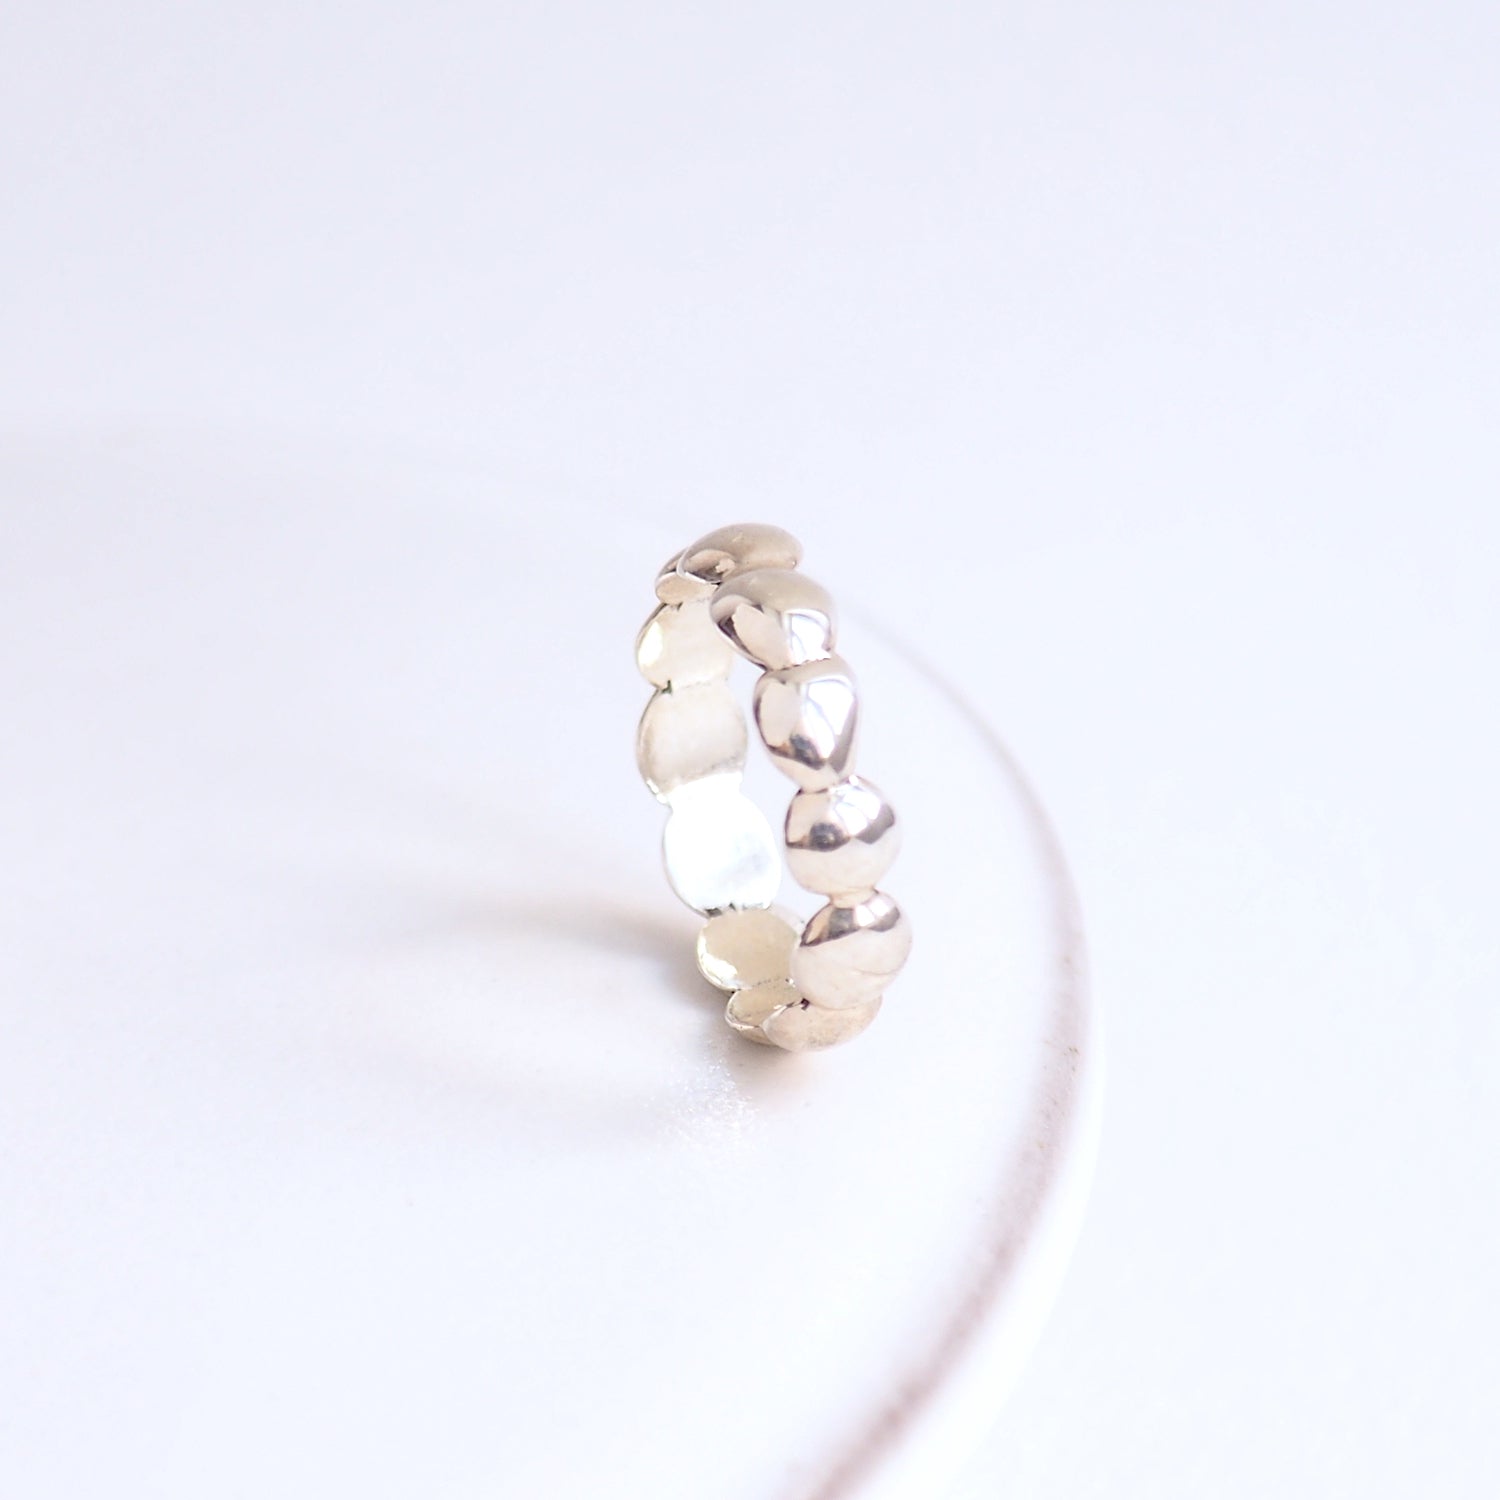 ring unique Silver Jewelry handcrafted handmade fashion bespoke custom design